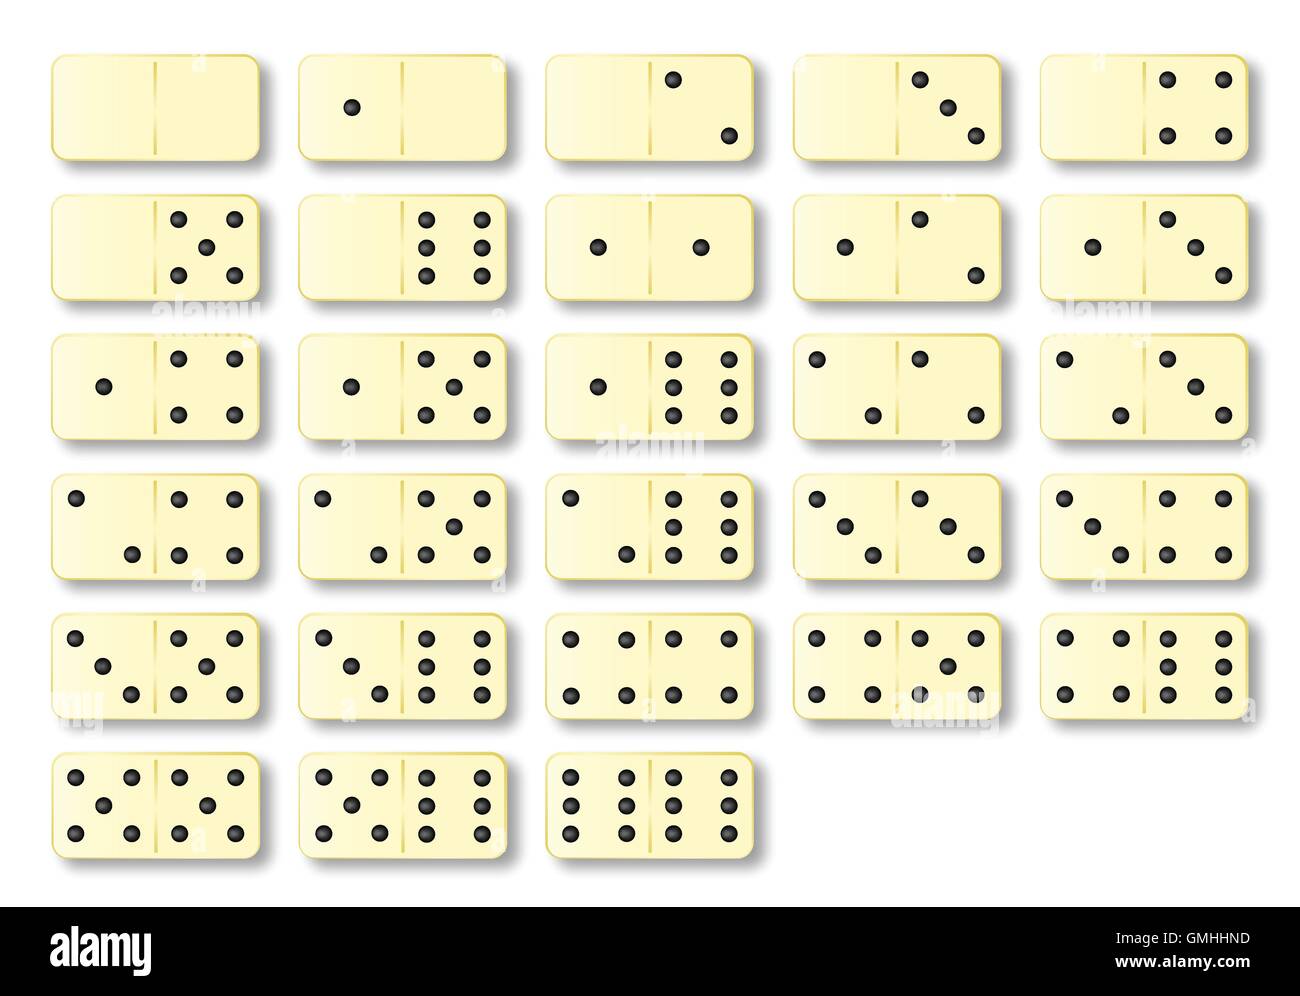 Fichas de dominó Imágenes vectoriales de stock - Alamy